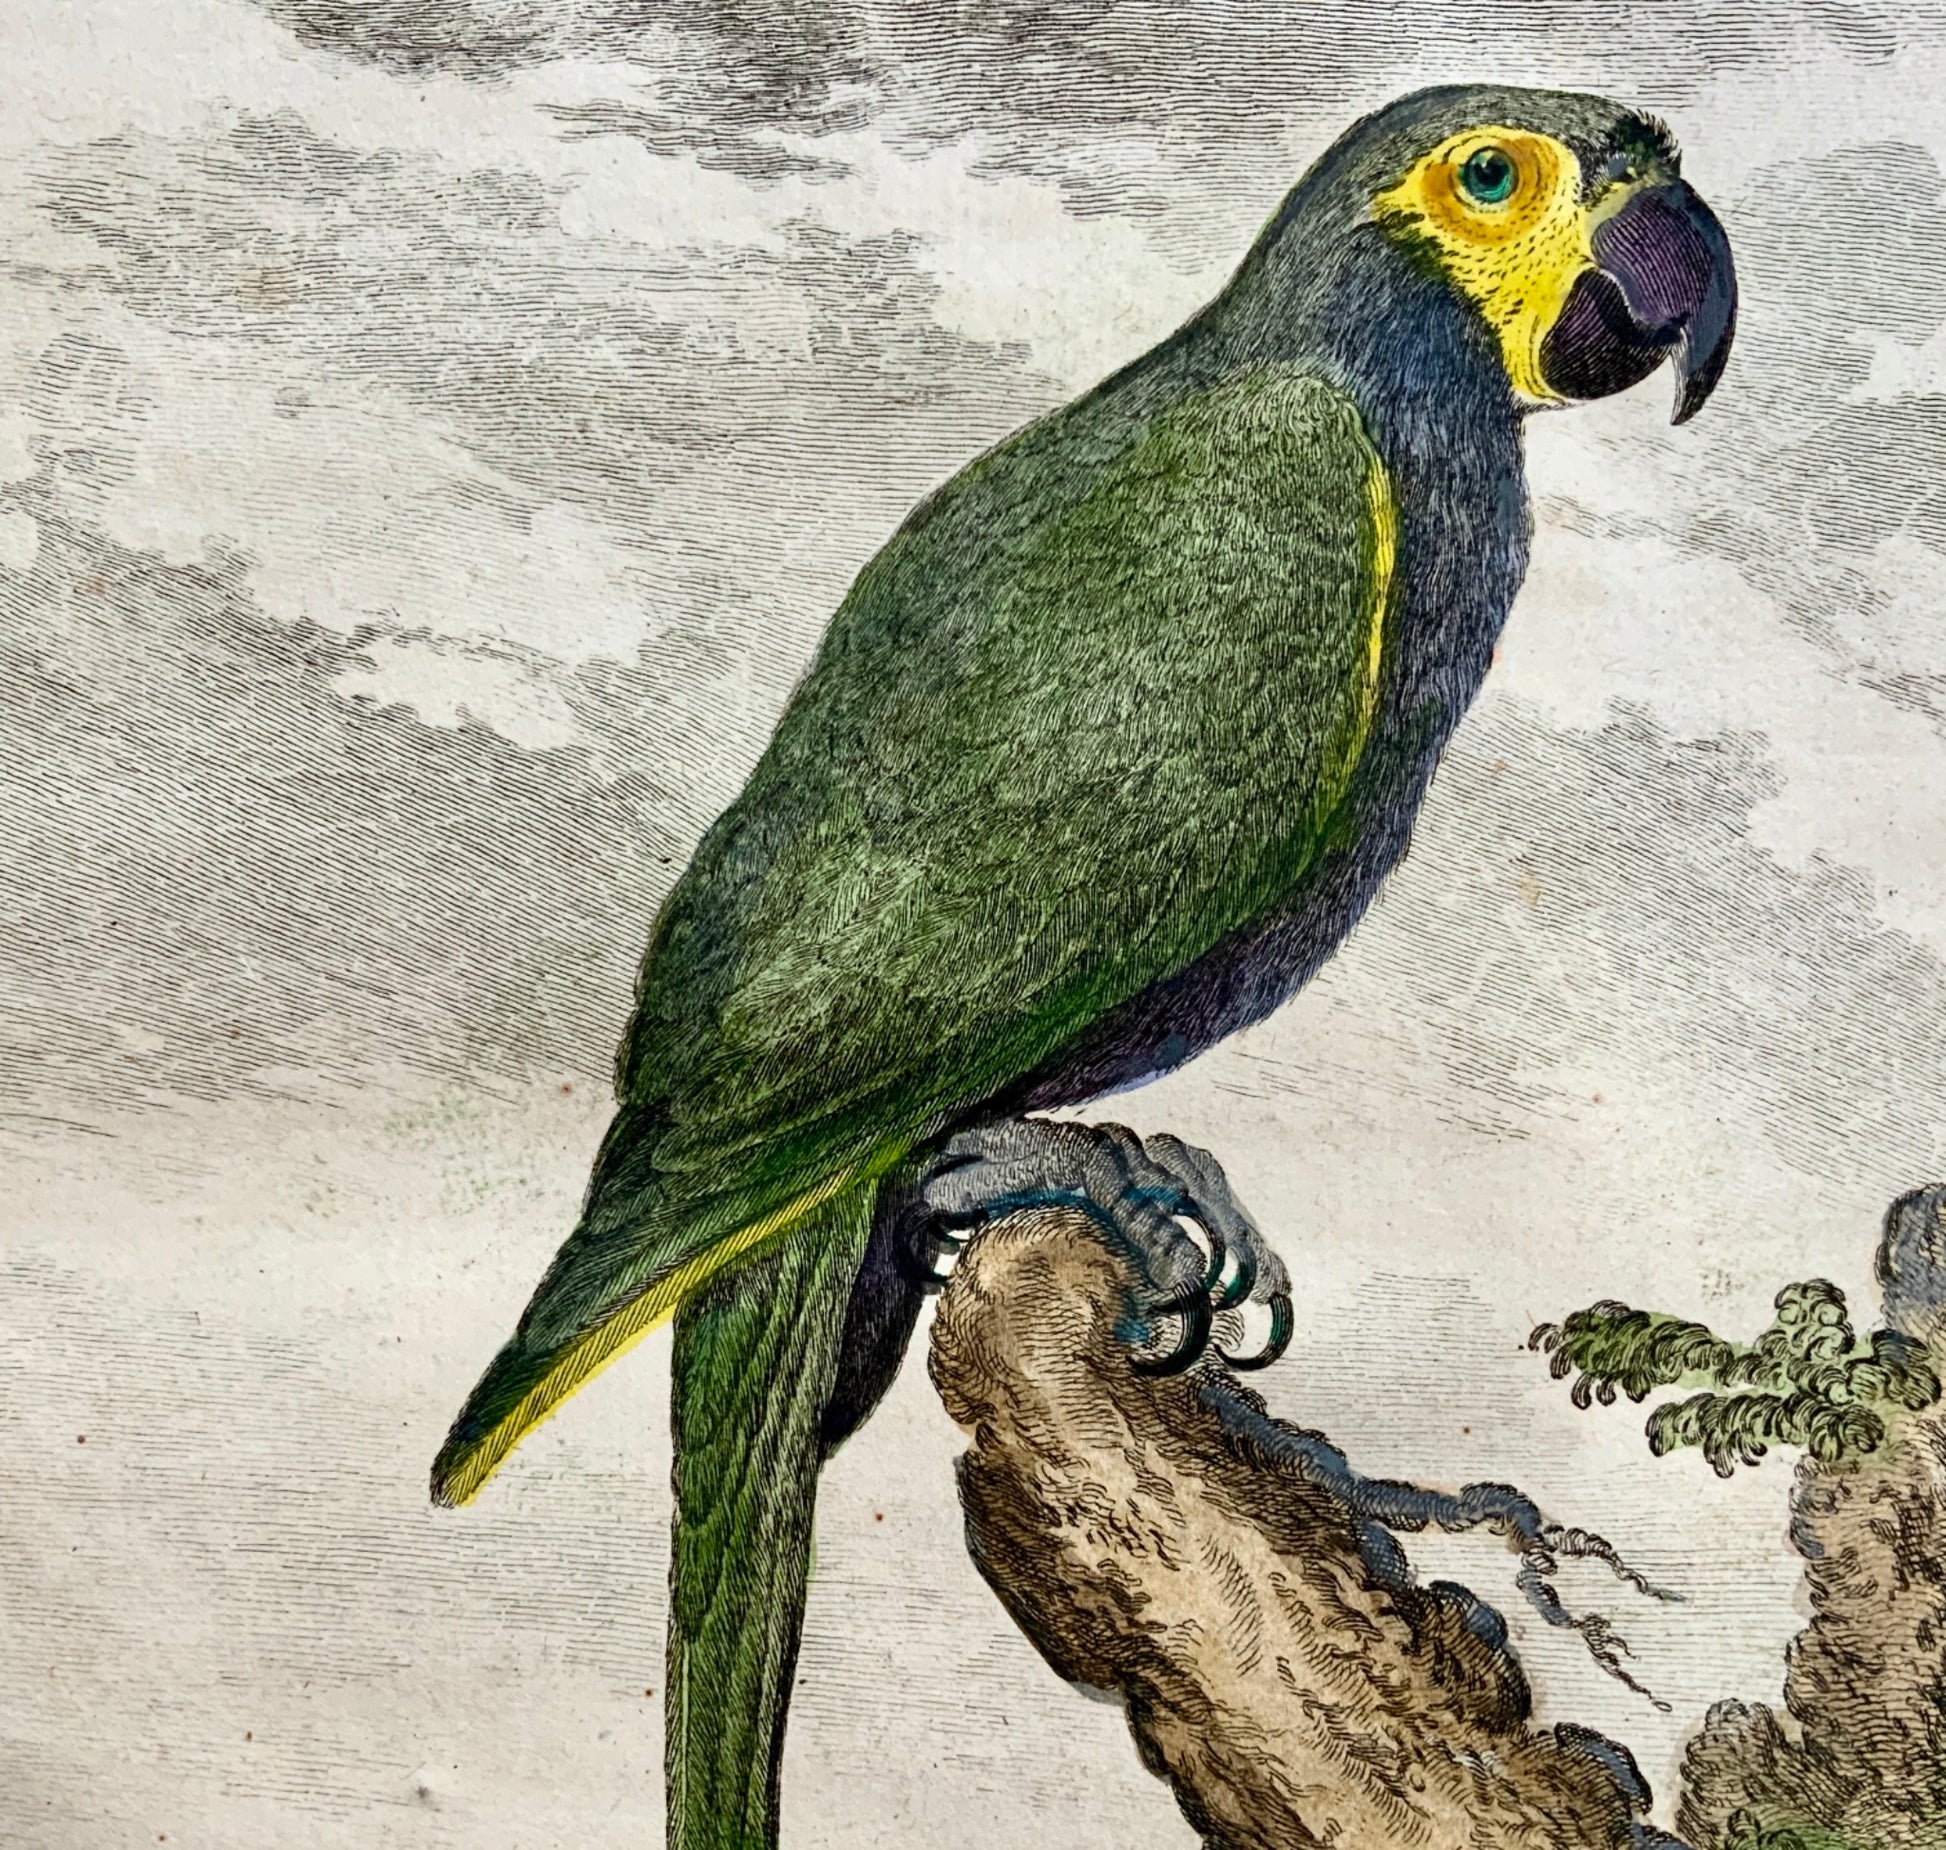 1779 Haussard after Jacques de Seve - L’Ara Vert - Parrot - 4to engraving - Ornithology